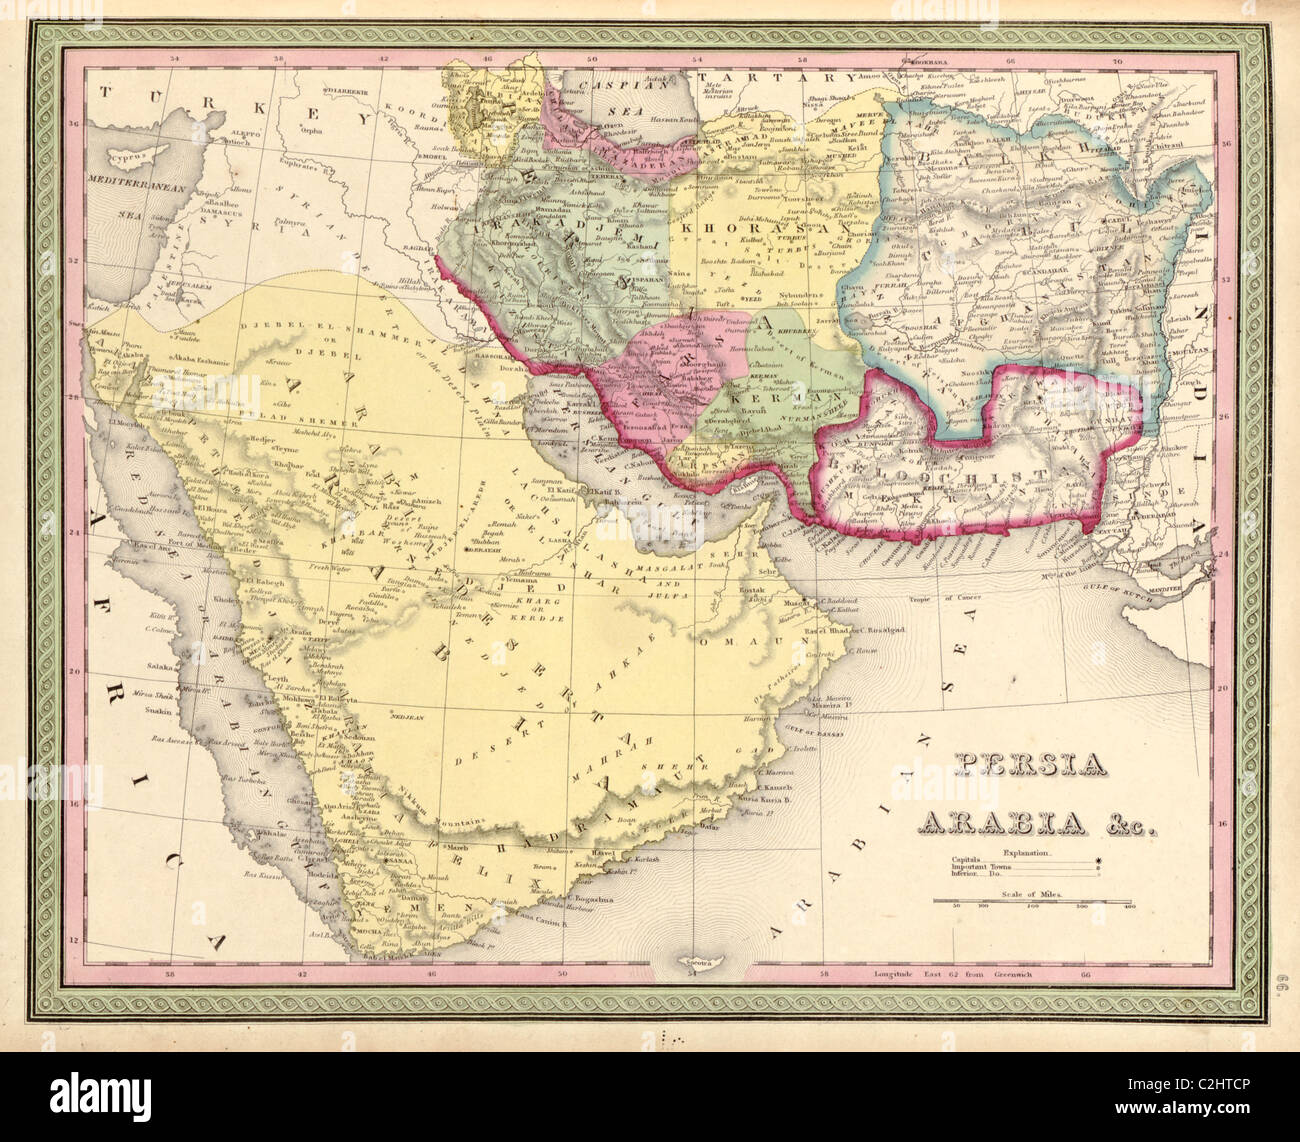 Persia & Arabia - 1849 Stock Photo